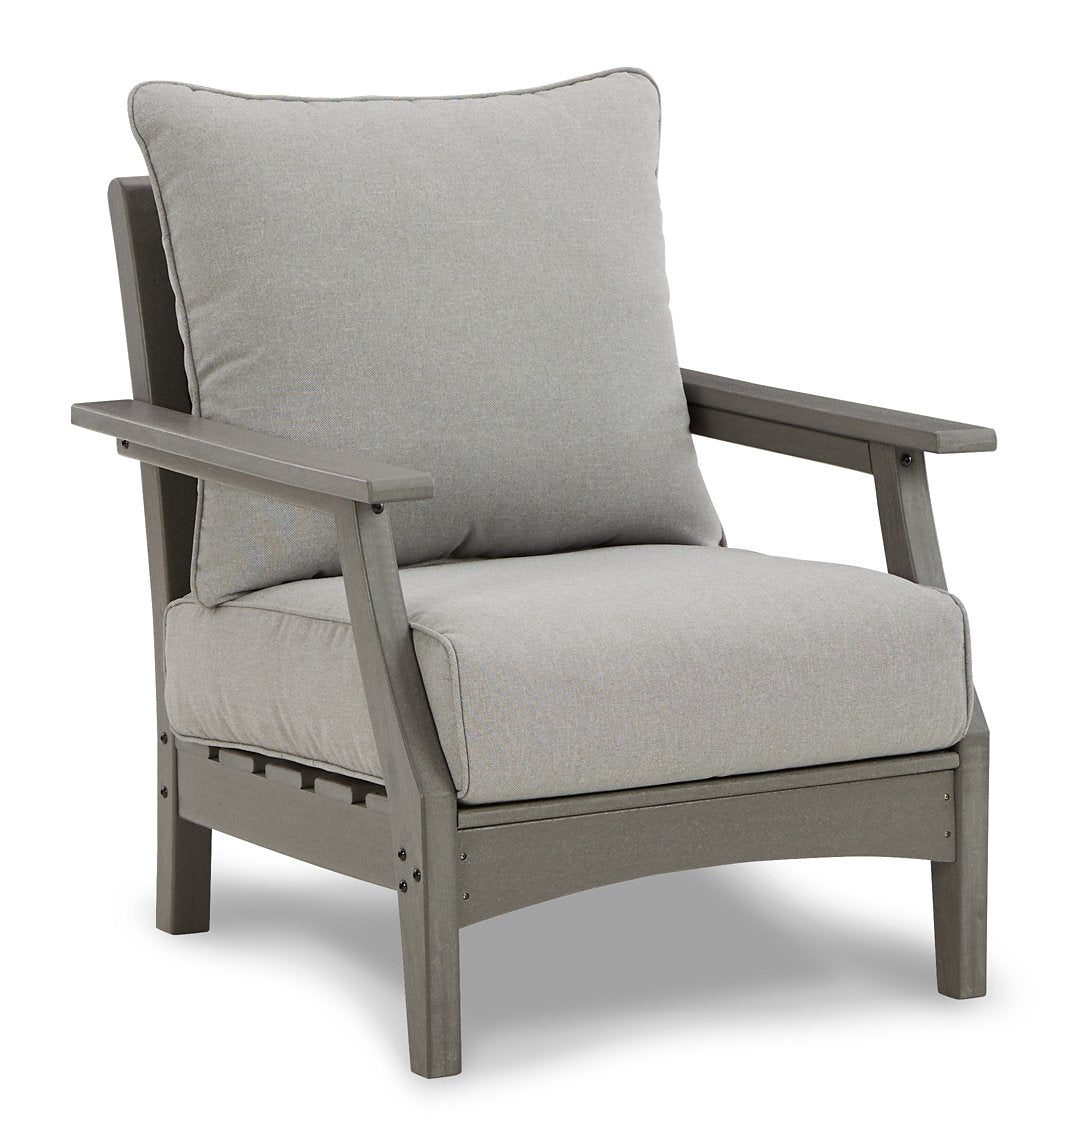 Visola Outdoor Seating Set - Romeo & Juliet Furniture (Warren,MI)